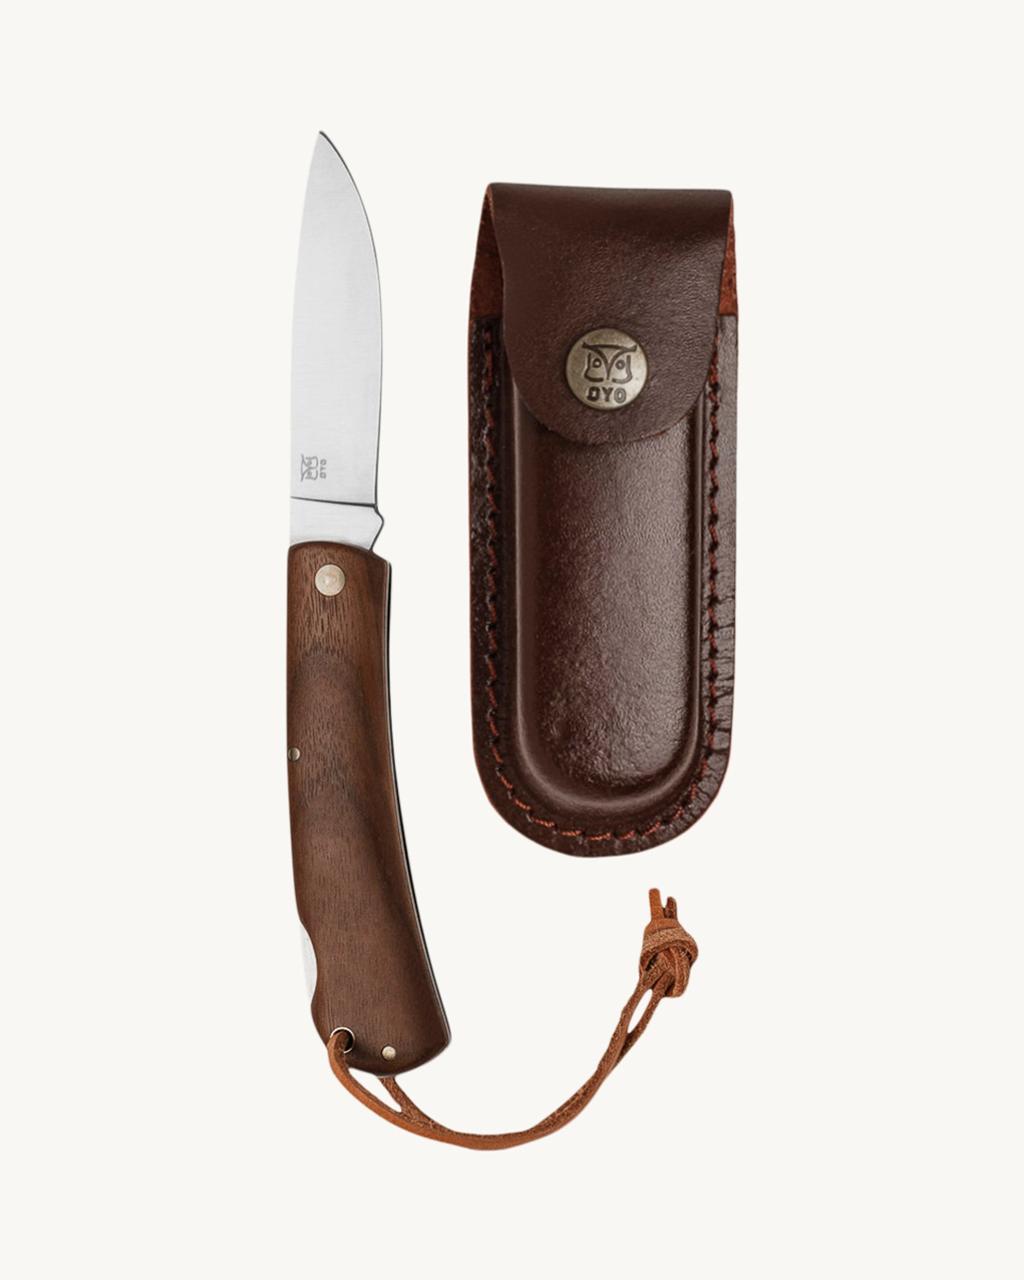 Nordmarka folding knife w/leather sheath